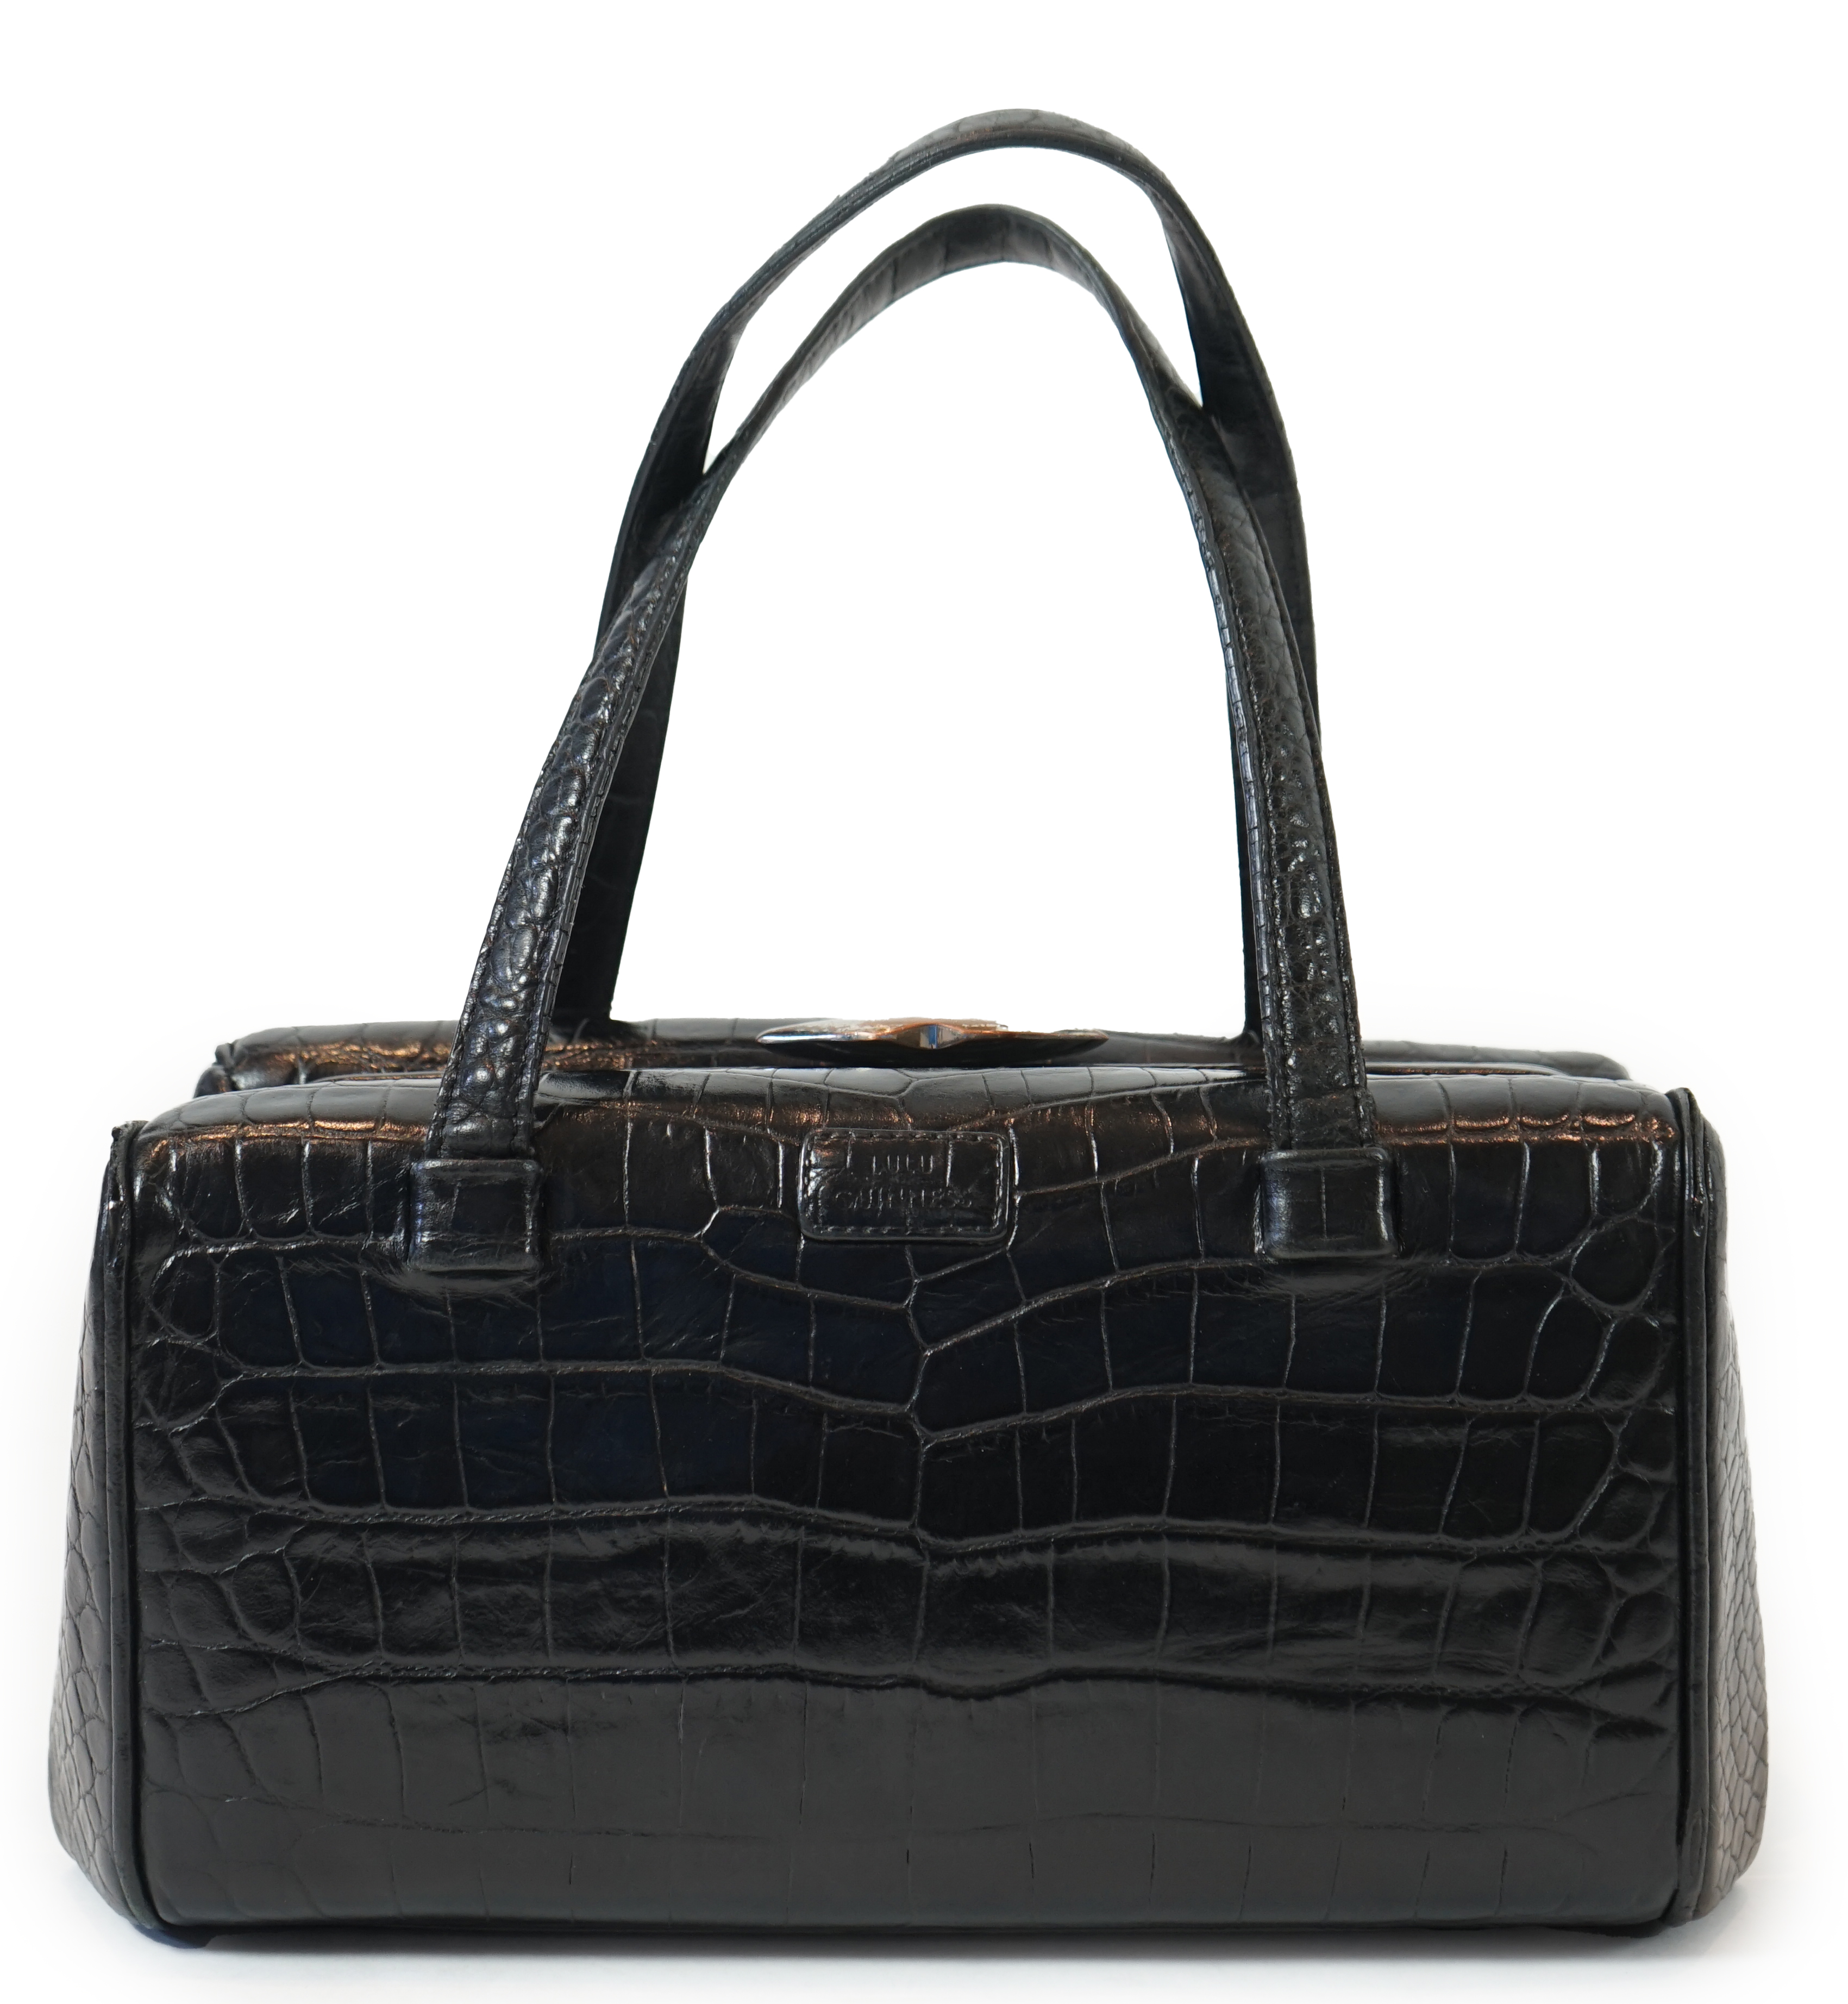 A vintage Lulu Guinness black leather mock croc handbag